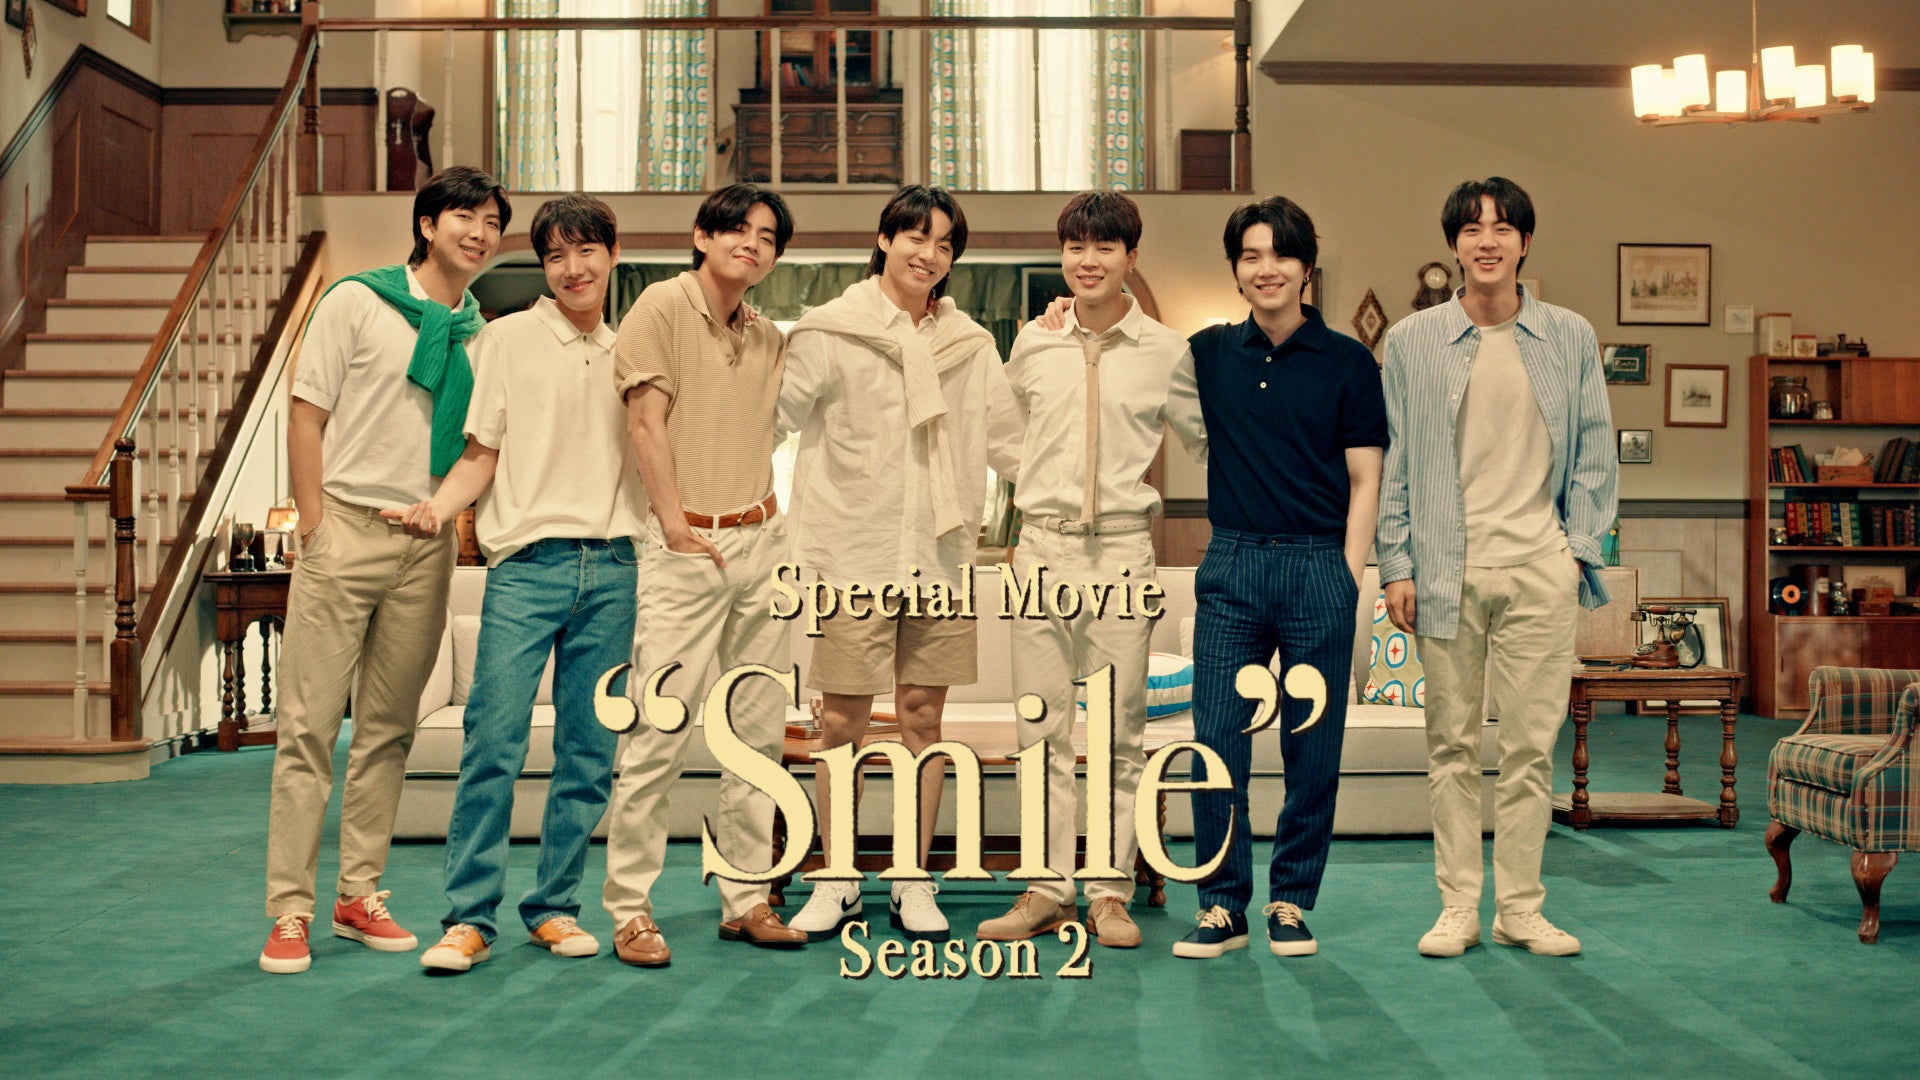 BTS主演「XYLITOL×BTS Smile」シリーズ WEB CM「XYLITOL×BTS Smile Special Movie Season2」を公開いたします。